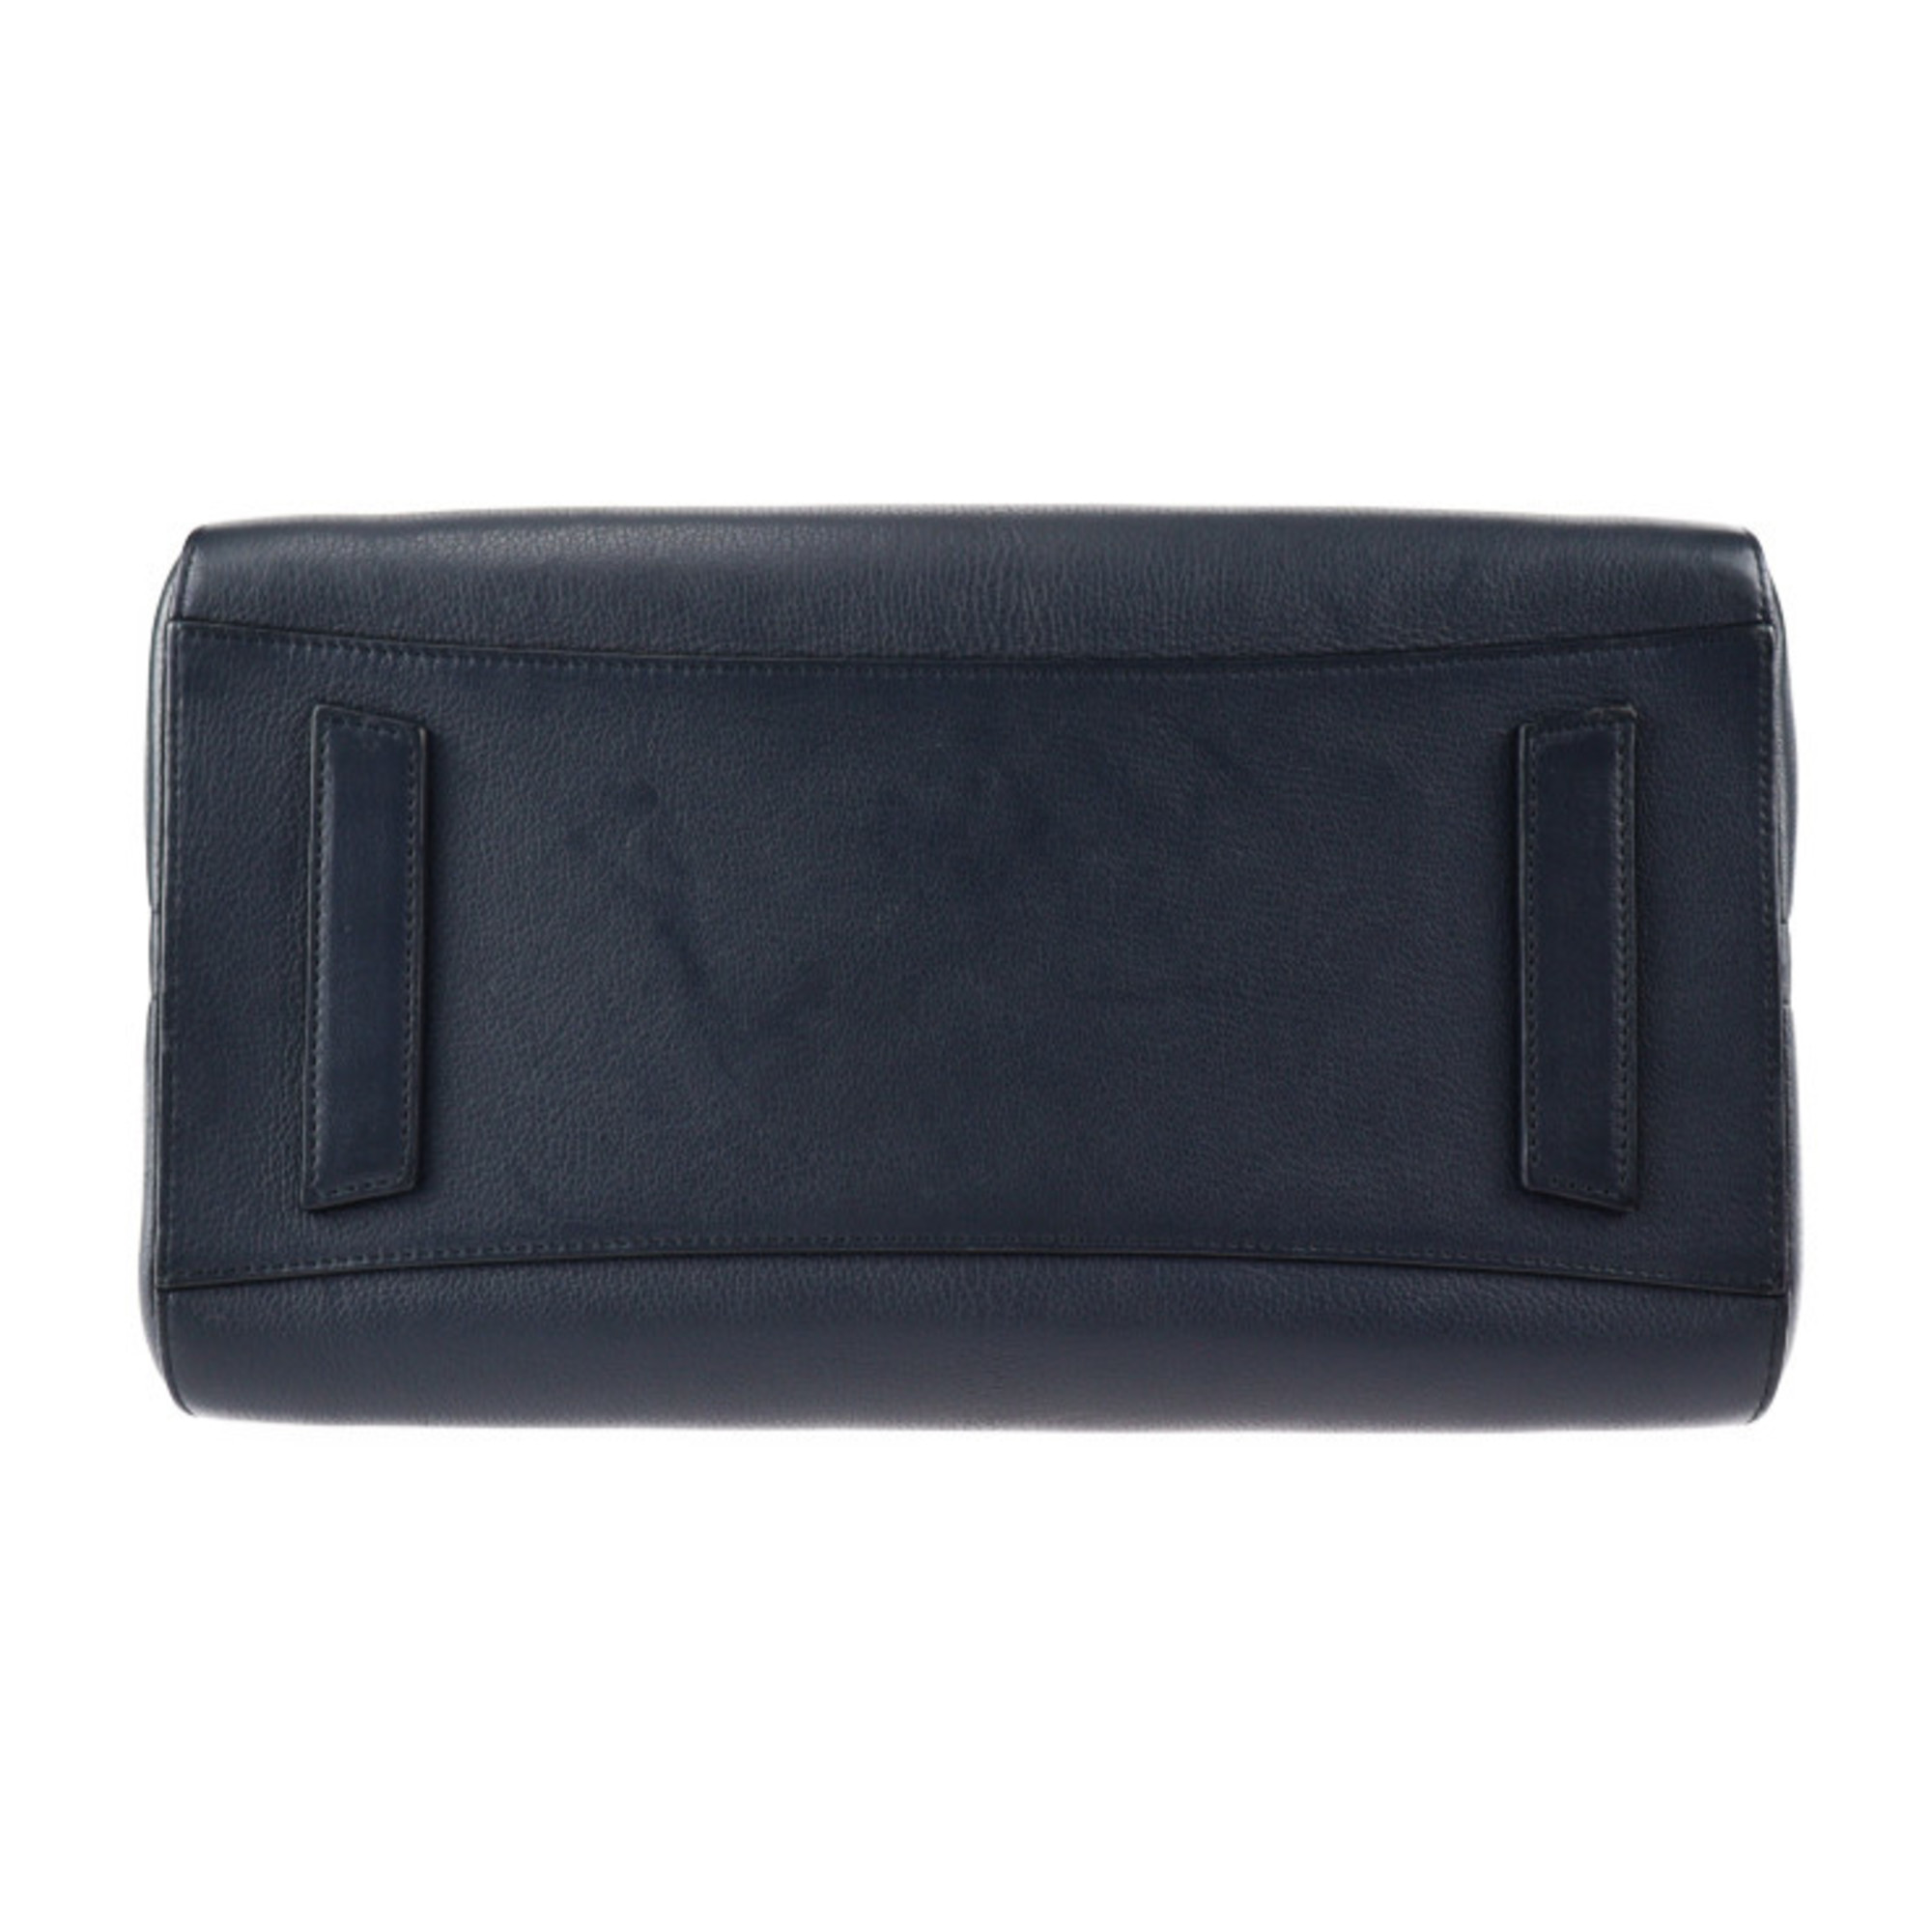 GIVENCHY Antigona Medium Handbag BB05118012 Leather Dark Navy 2WAY Shoulder Bag M Size